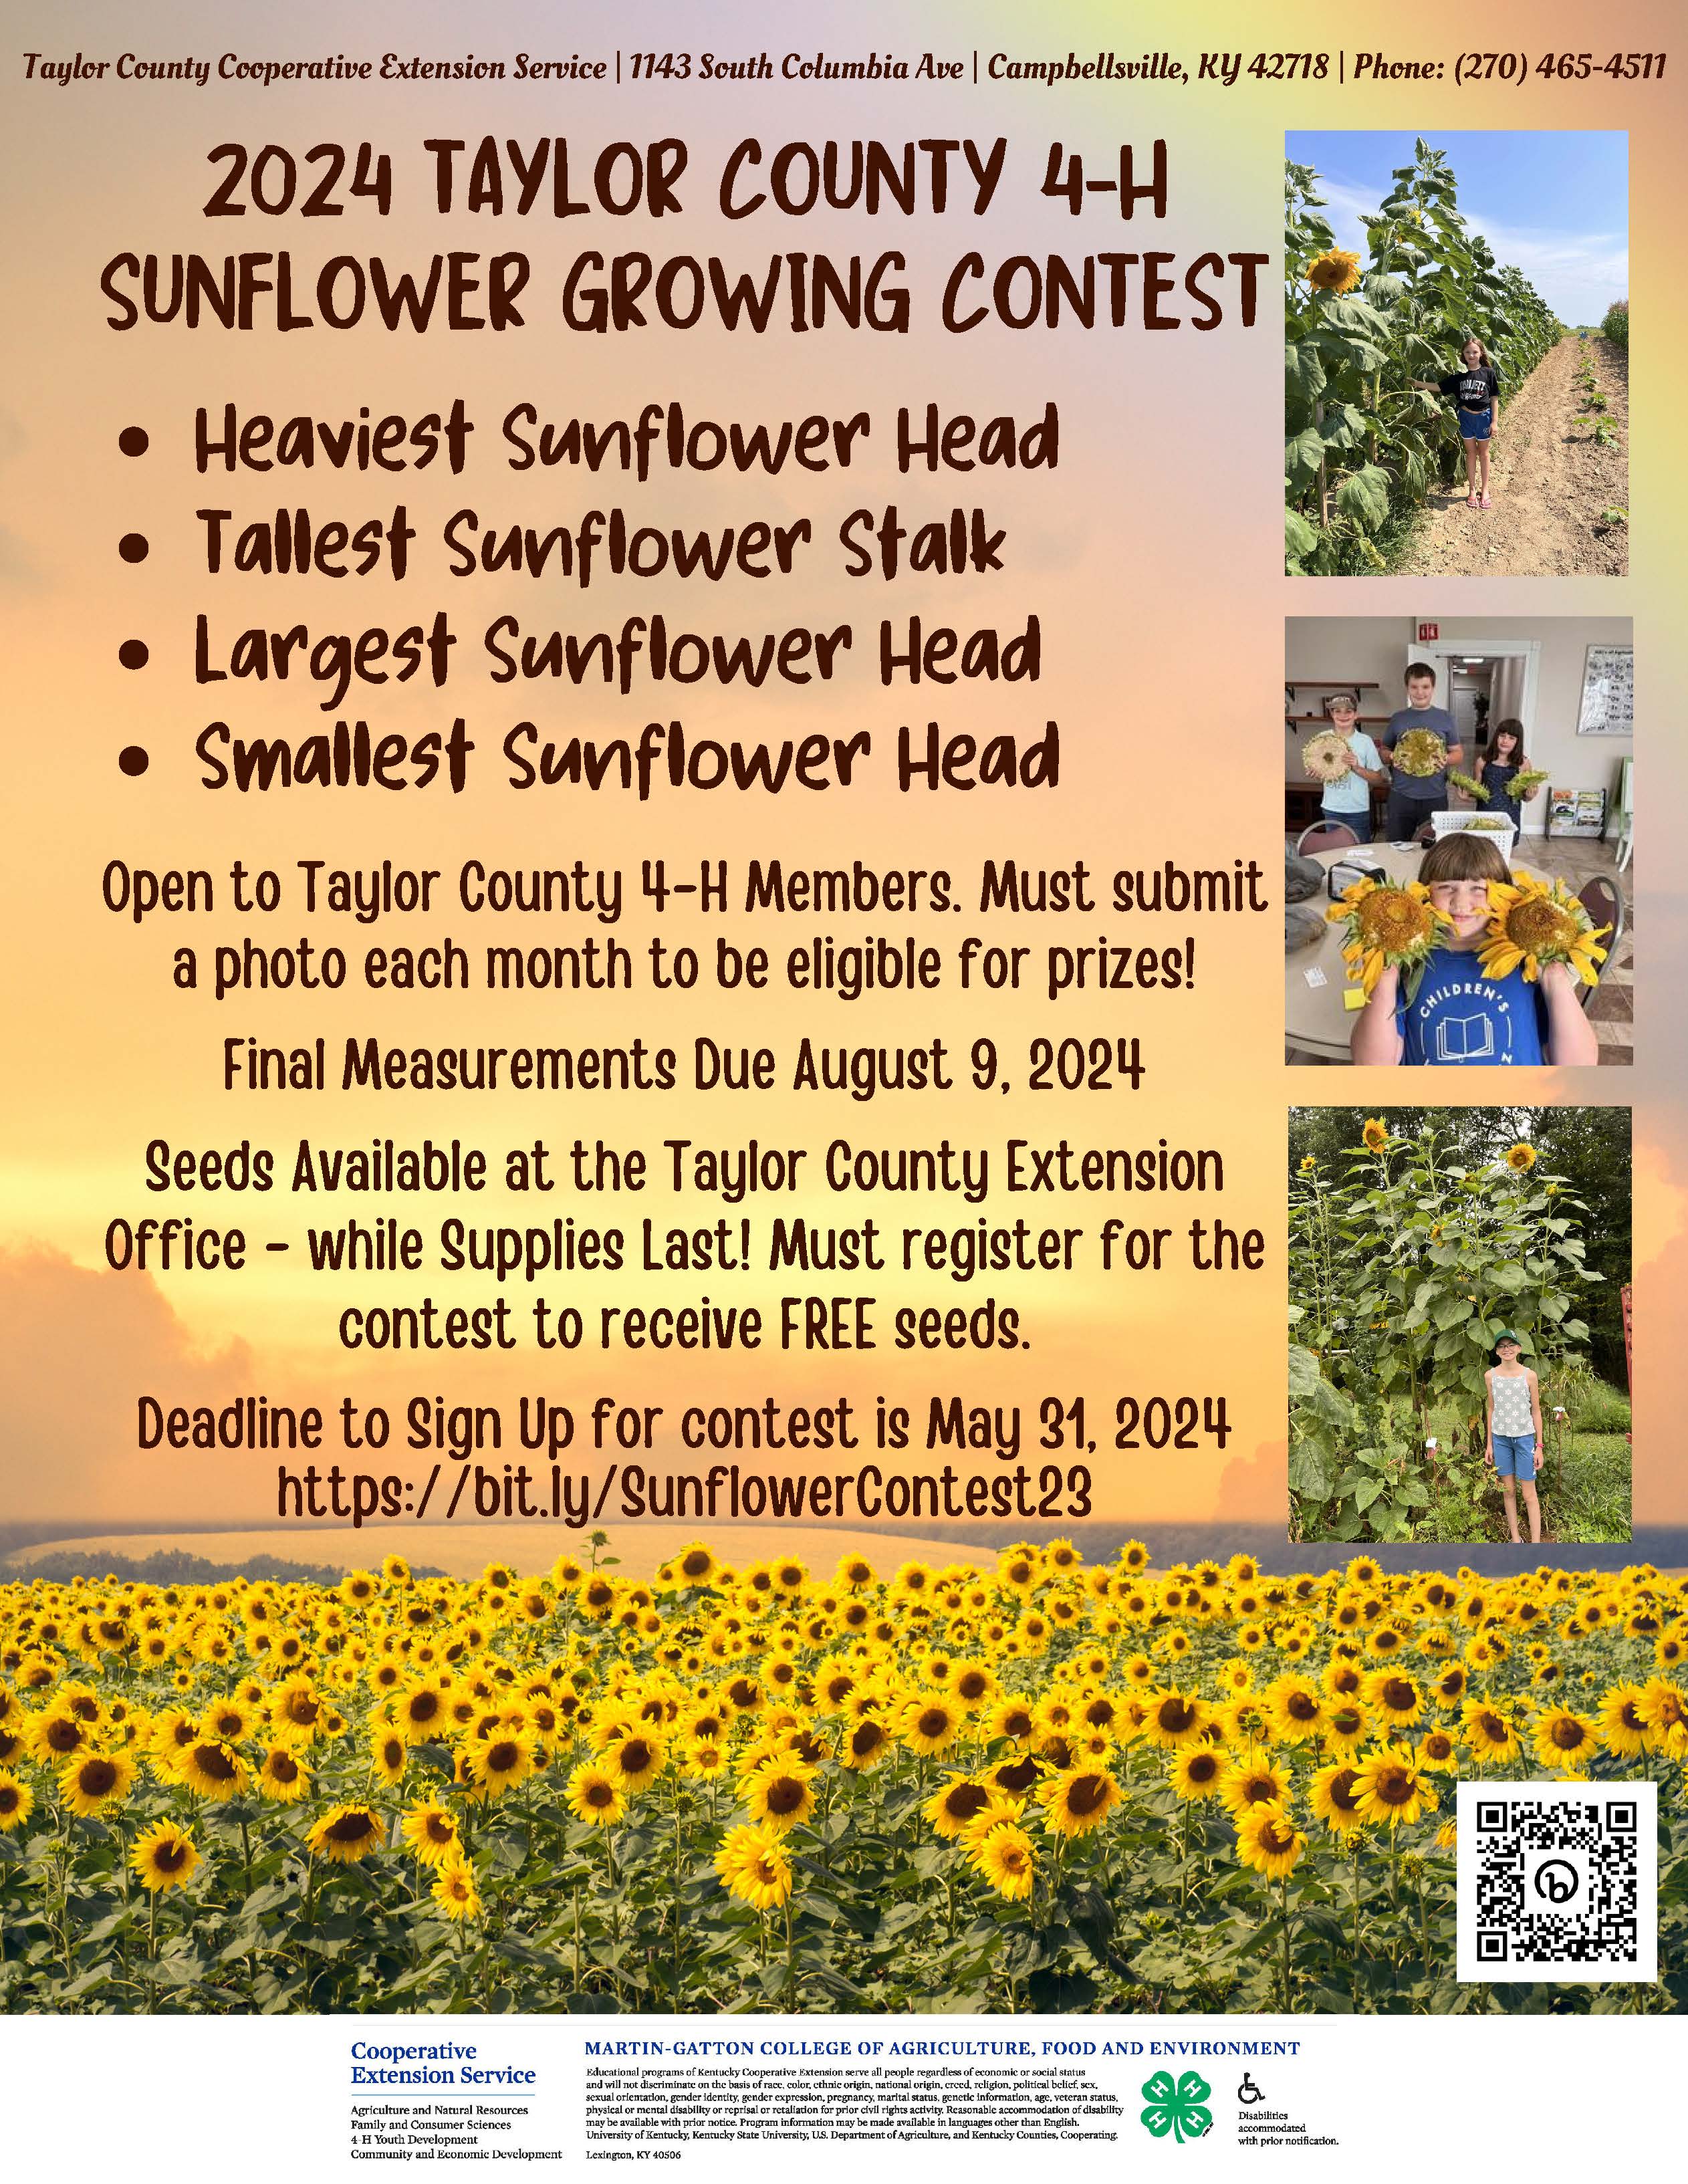 sunflower contest